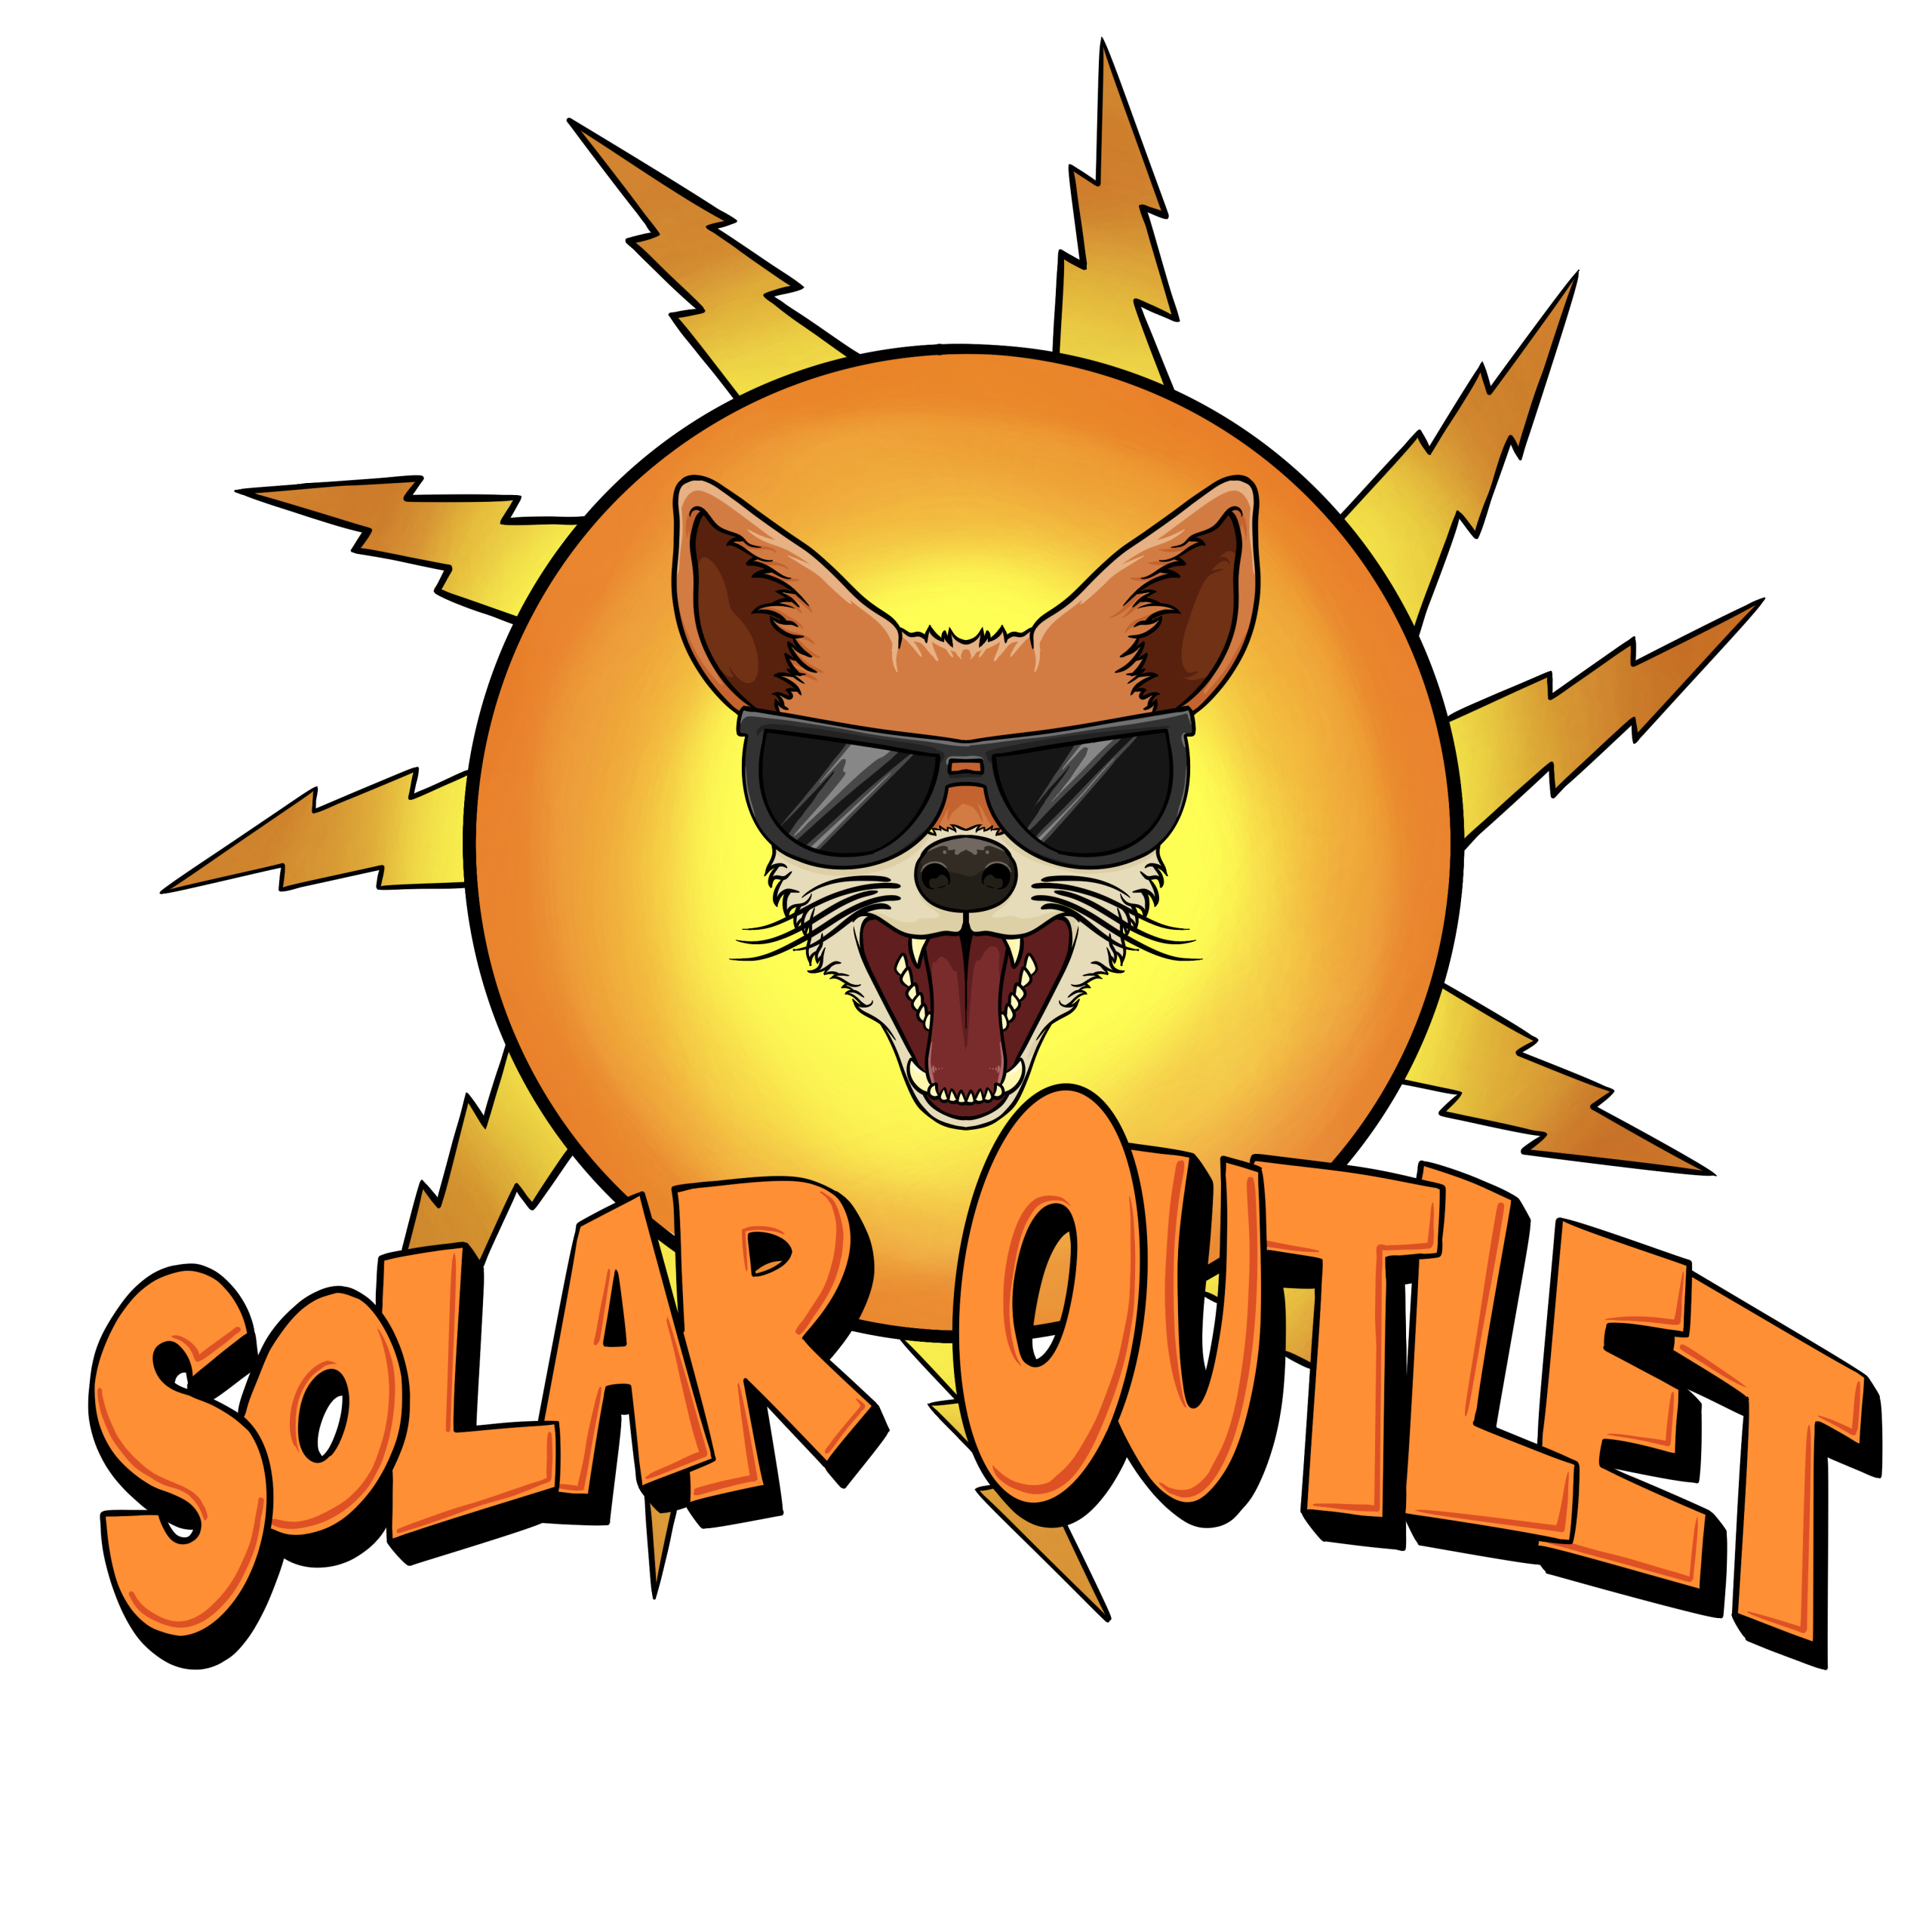 Solar Outlet